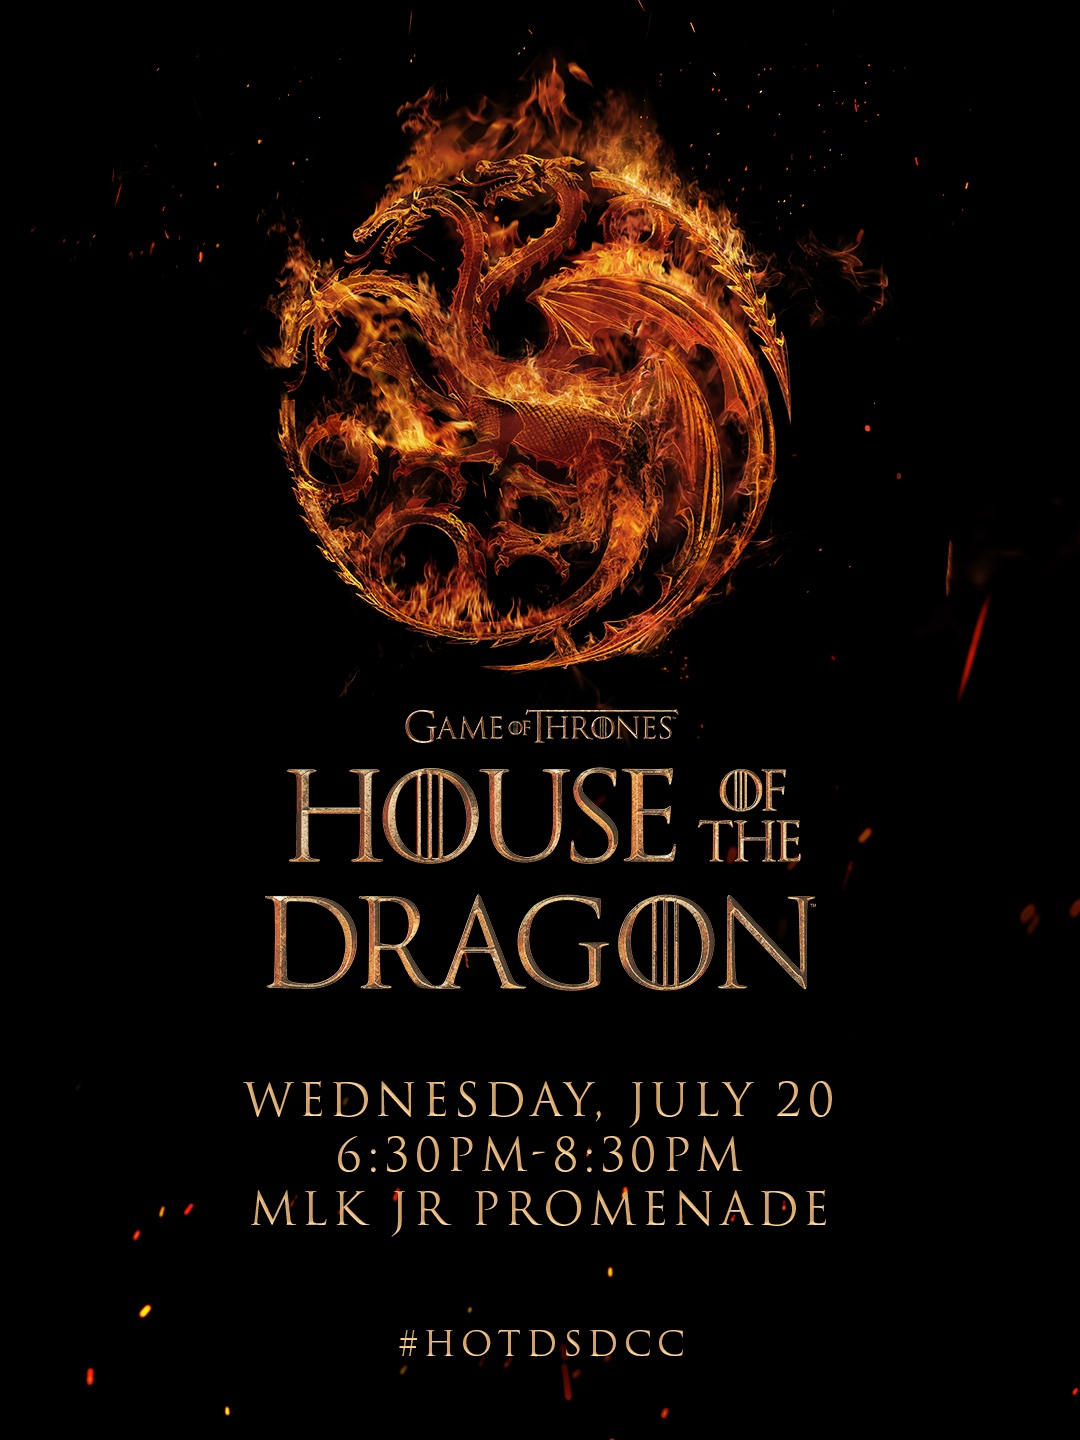 Primeiro episódio de Game of Thrones - House of the Dragon já está  disponível na HBO Max